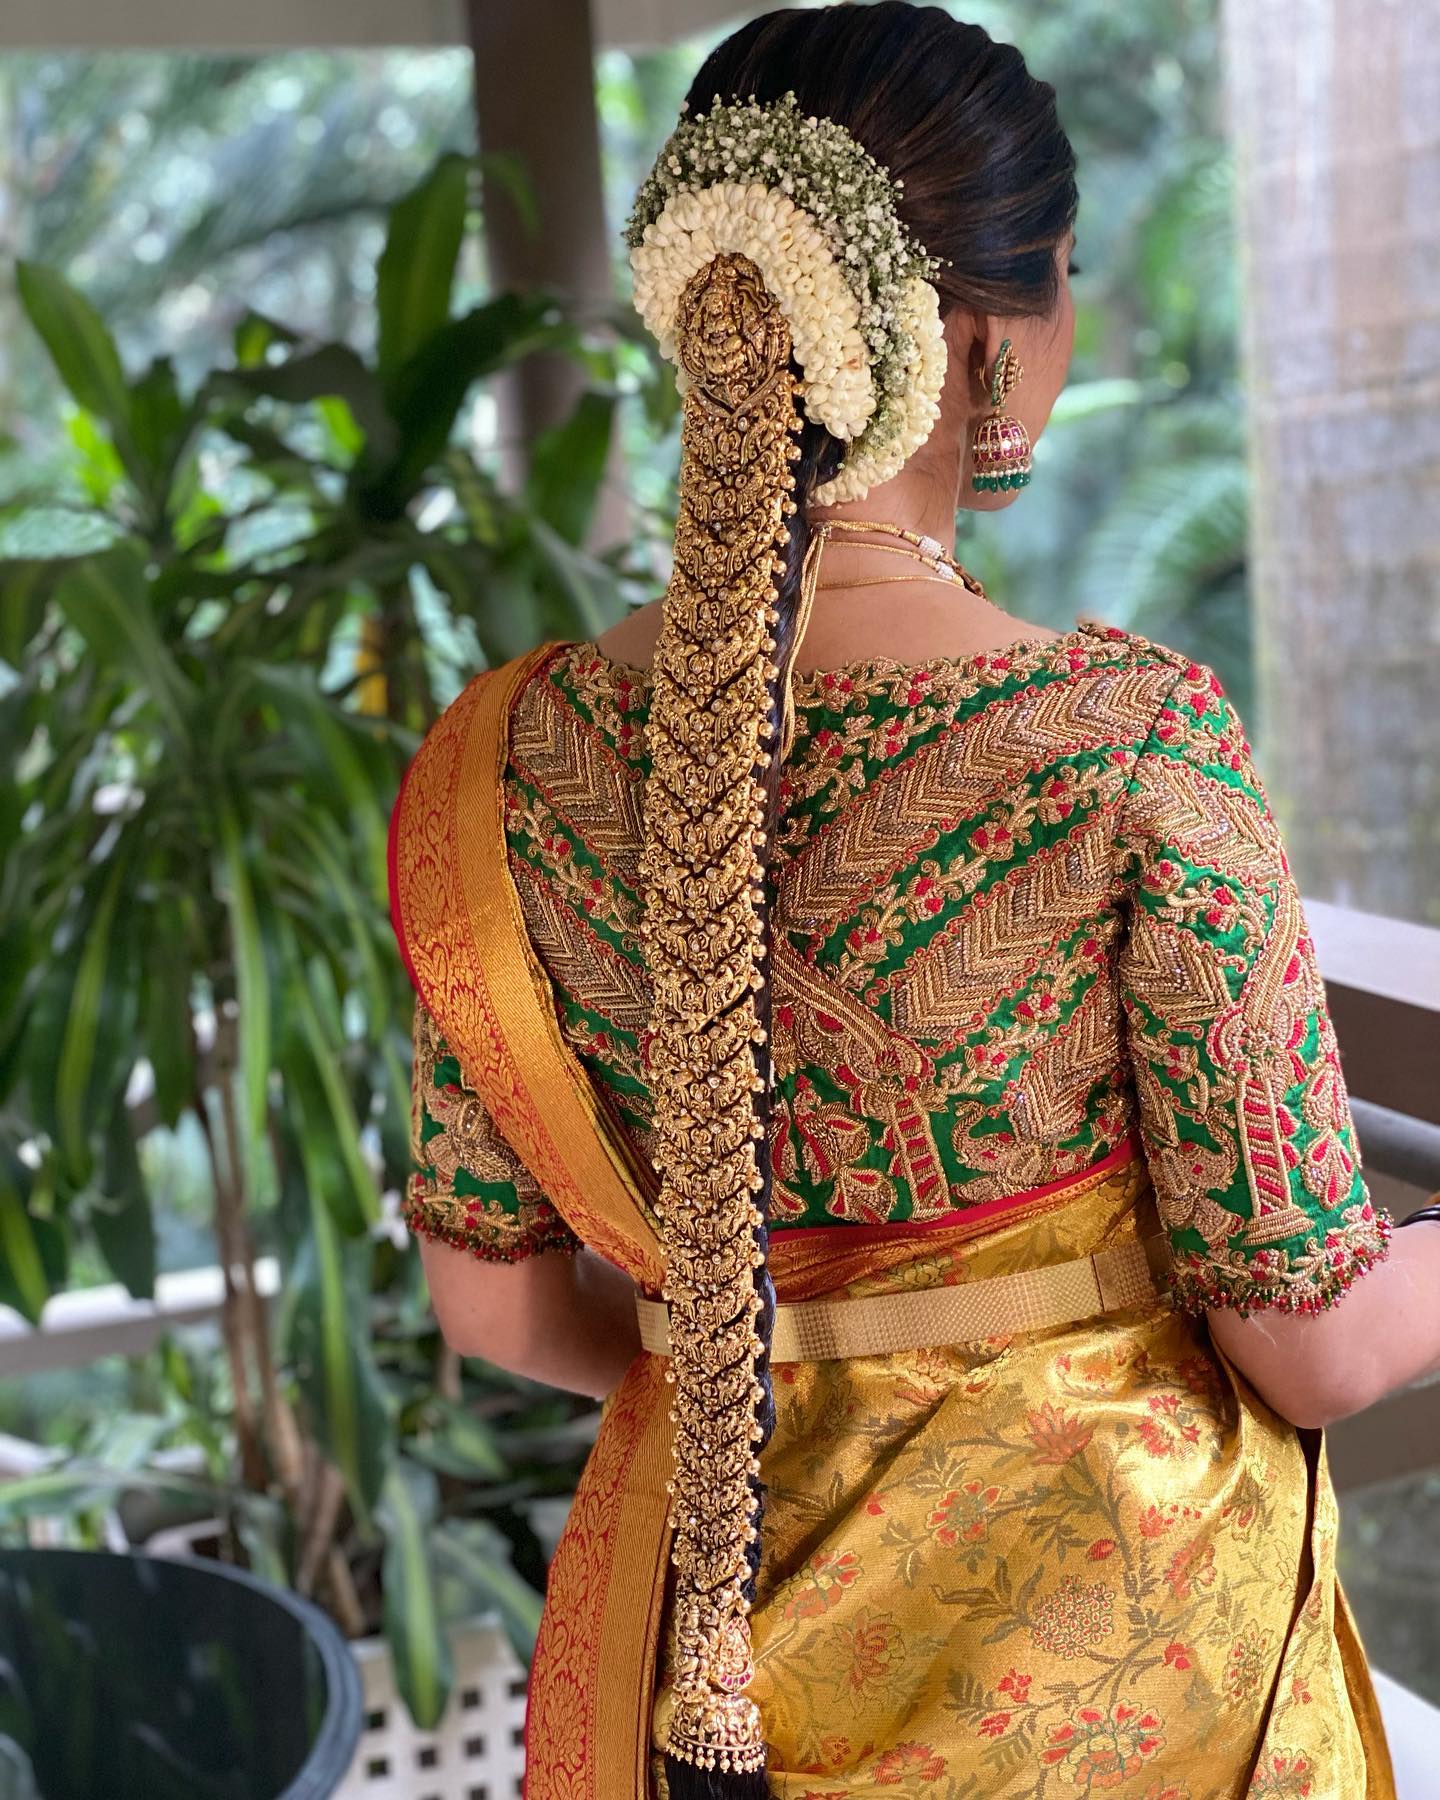 South Indian bridal hairstyle and Kanjeevaram south Indian bridal saree-Tamil bride look-Tamil saree look- south Indian saree look simple-simple wedding look in saree 